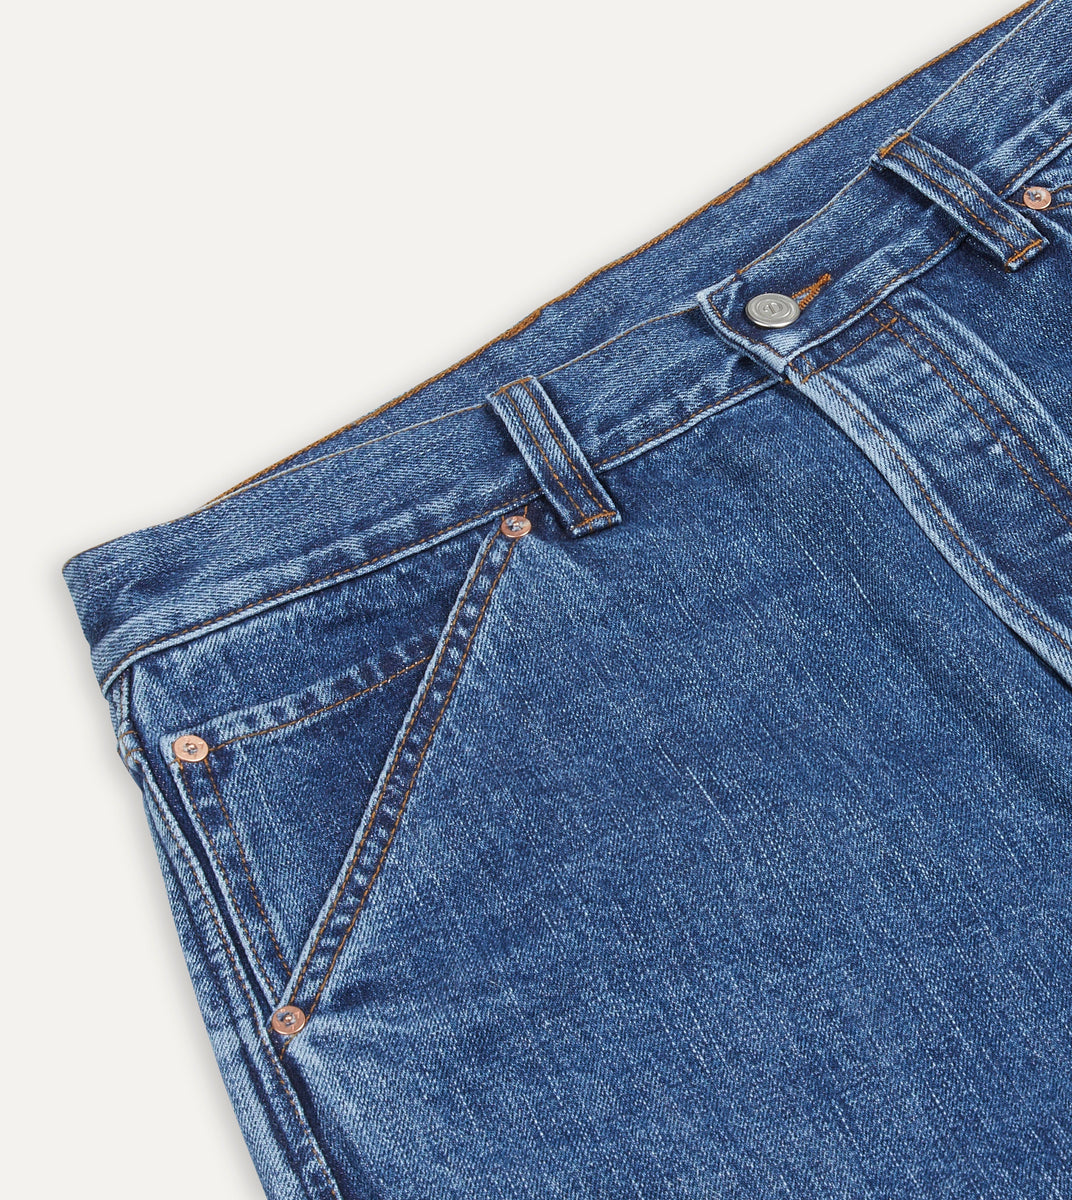 Japanese Bleach Denim Five-Pocket Selvedge – 14.2oz Jeans Wash Drakes US